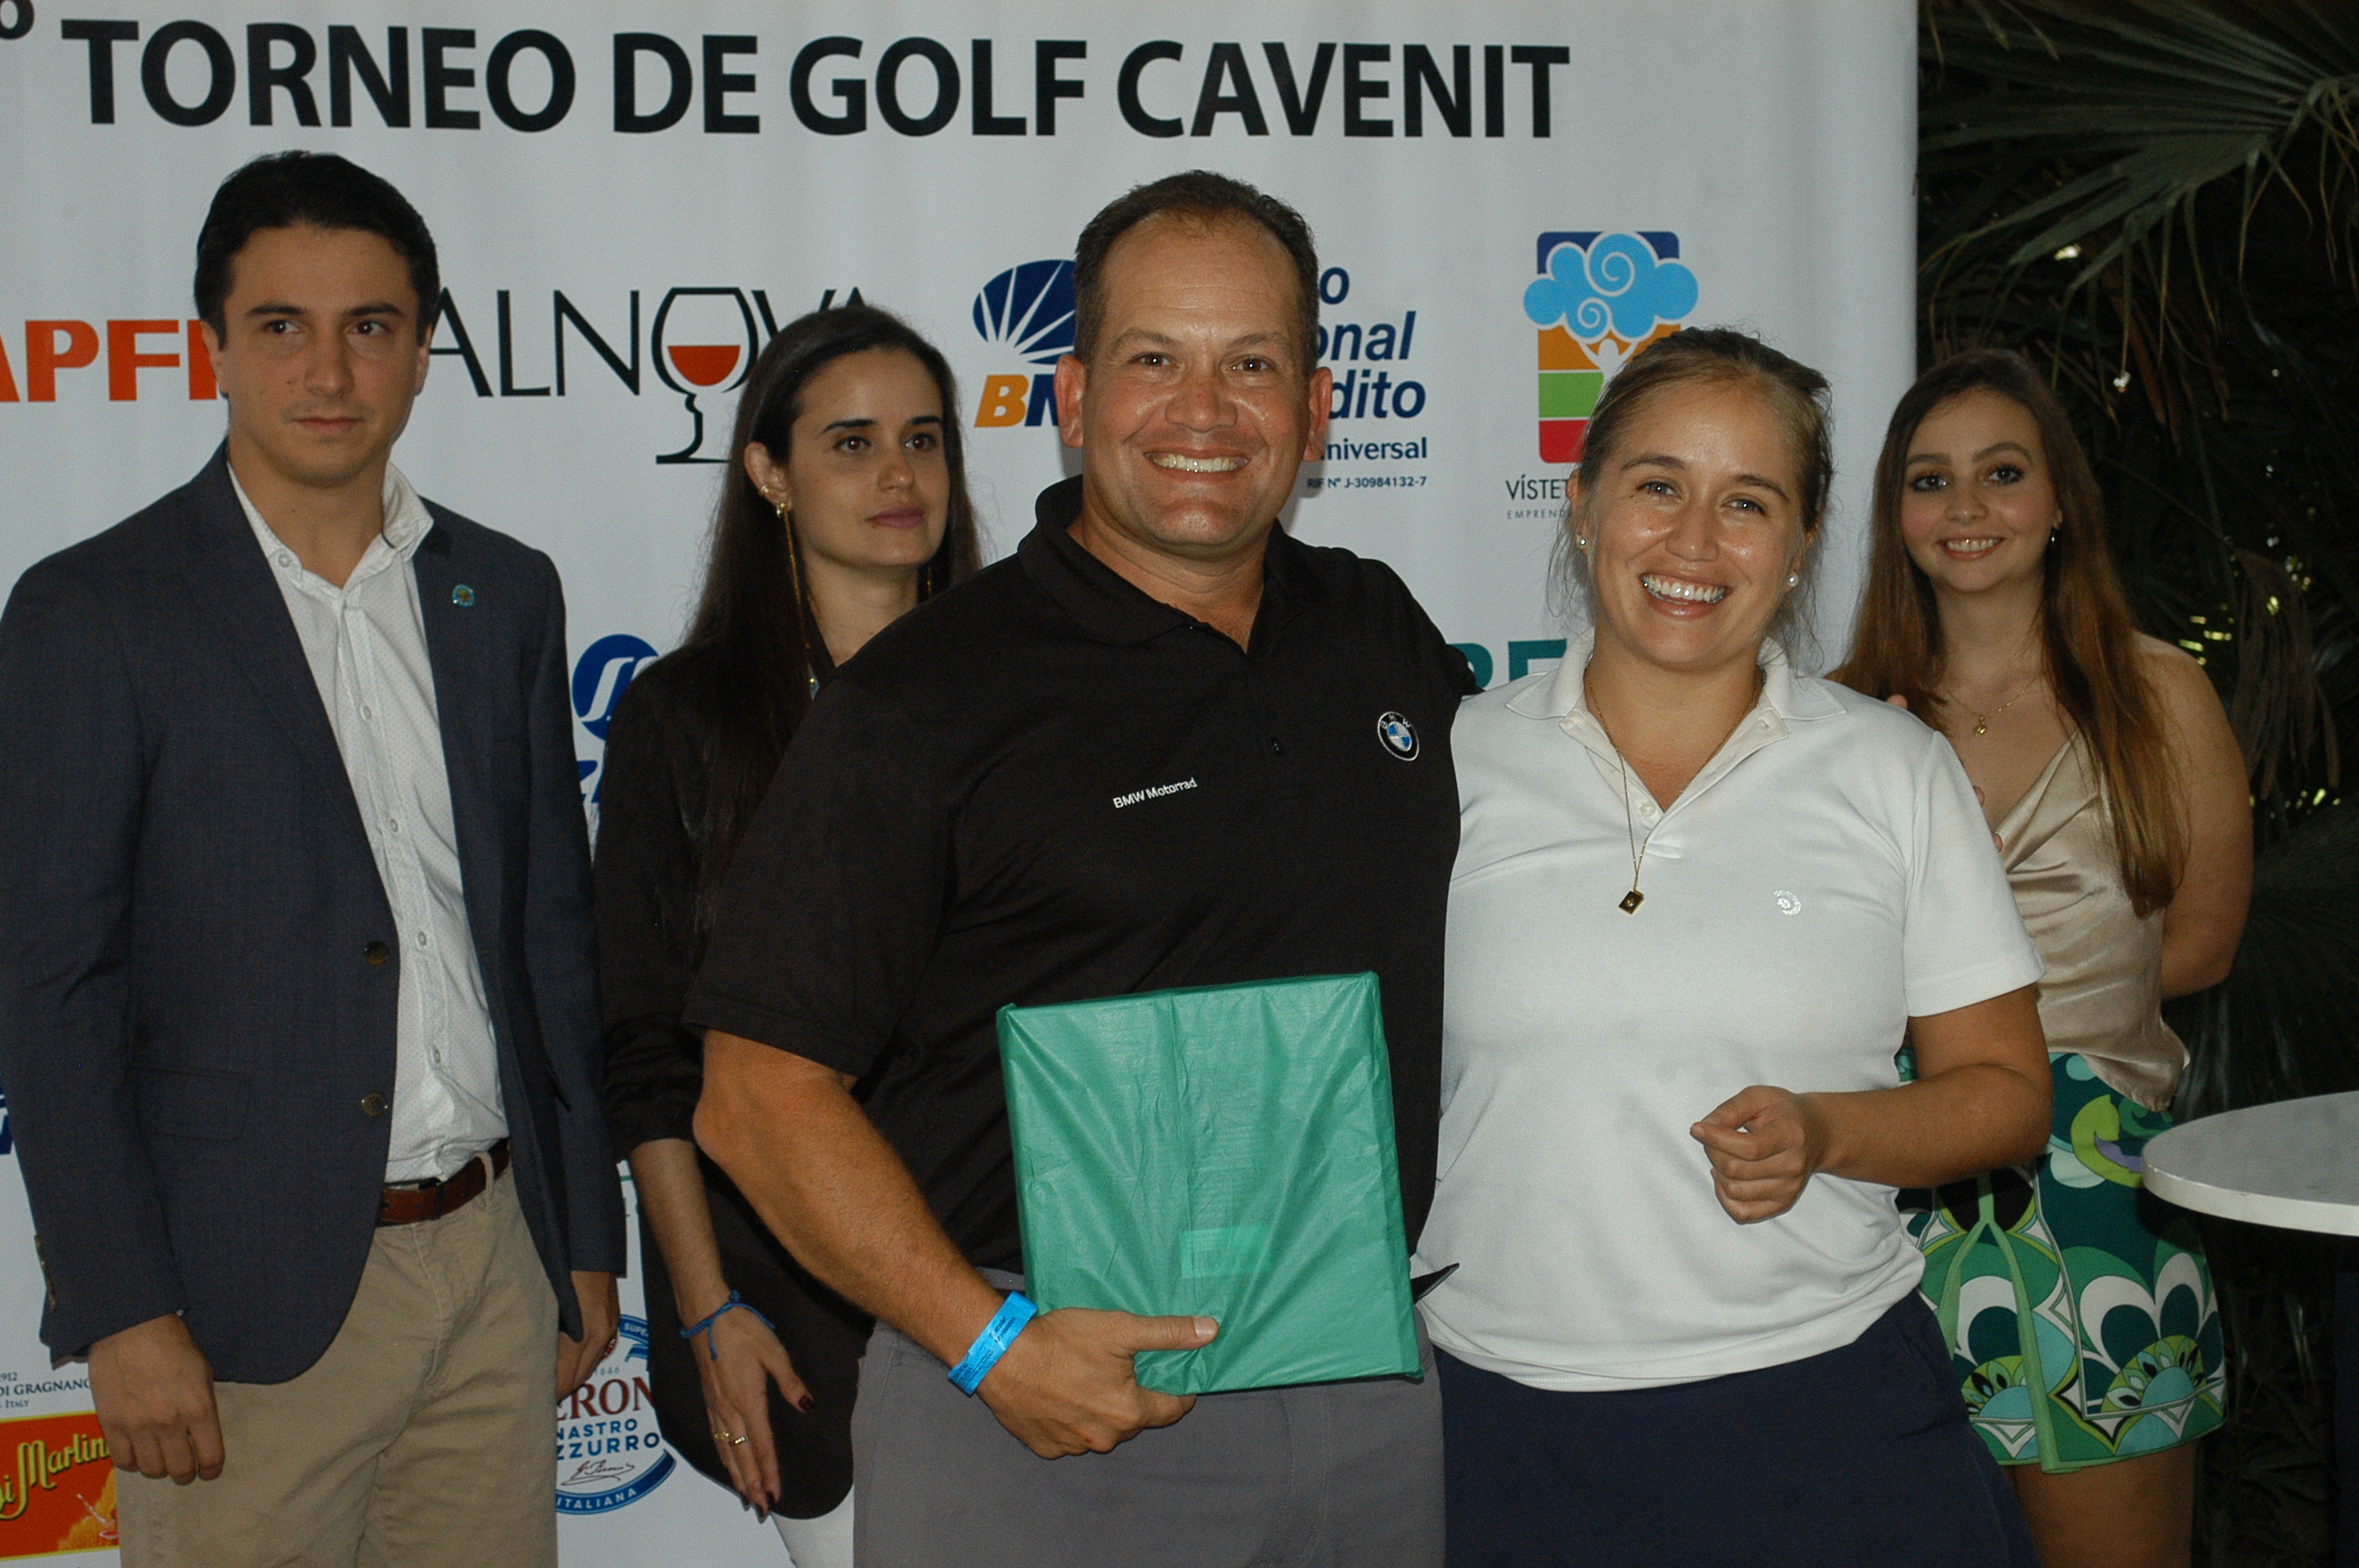 Cavenit promovió el Made In Italy a través de su II Torneo de Golf